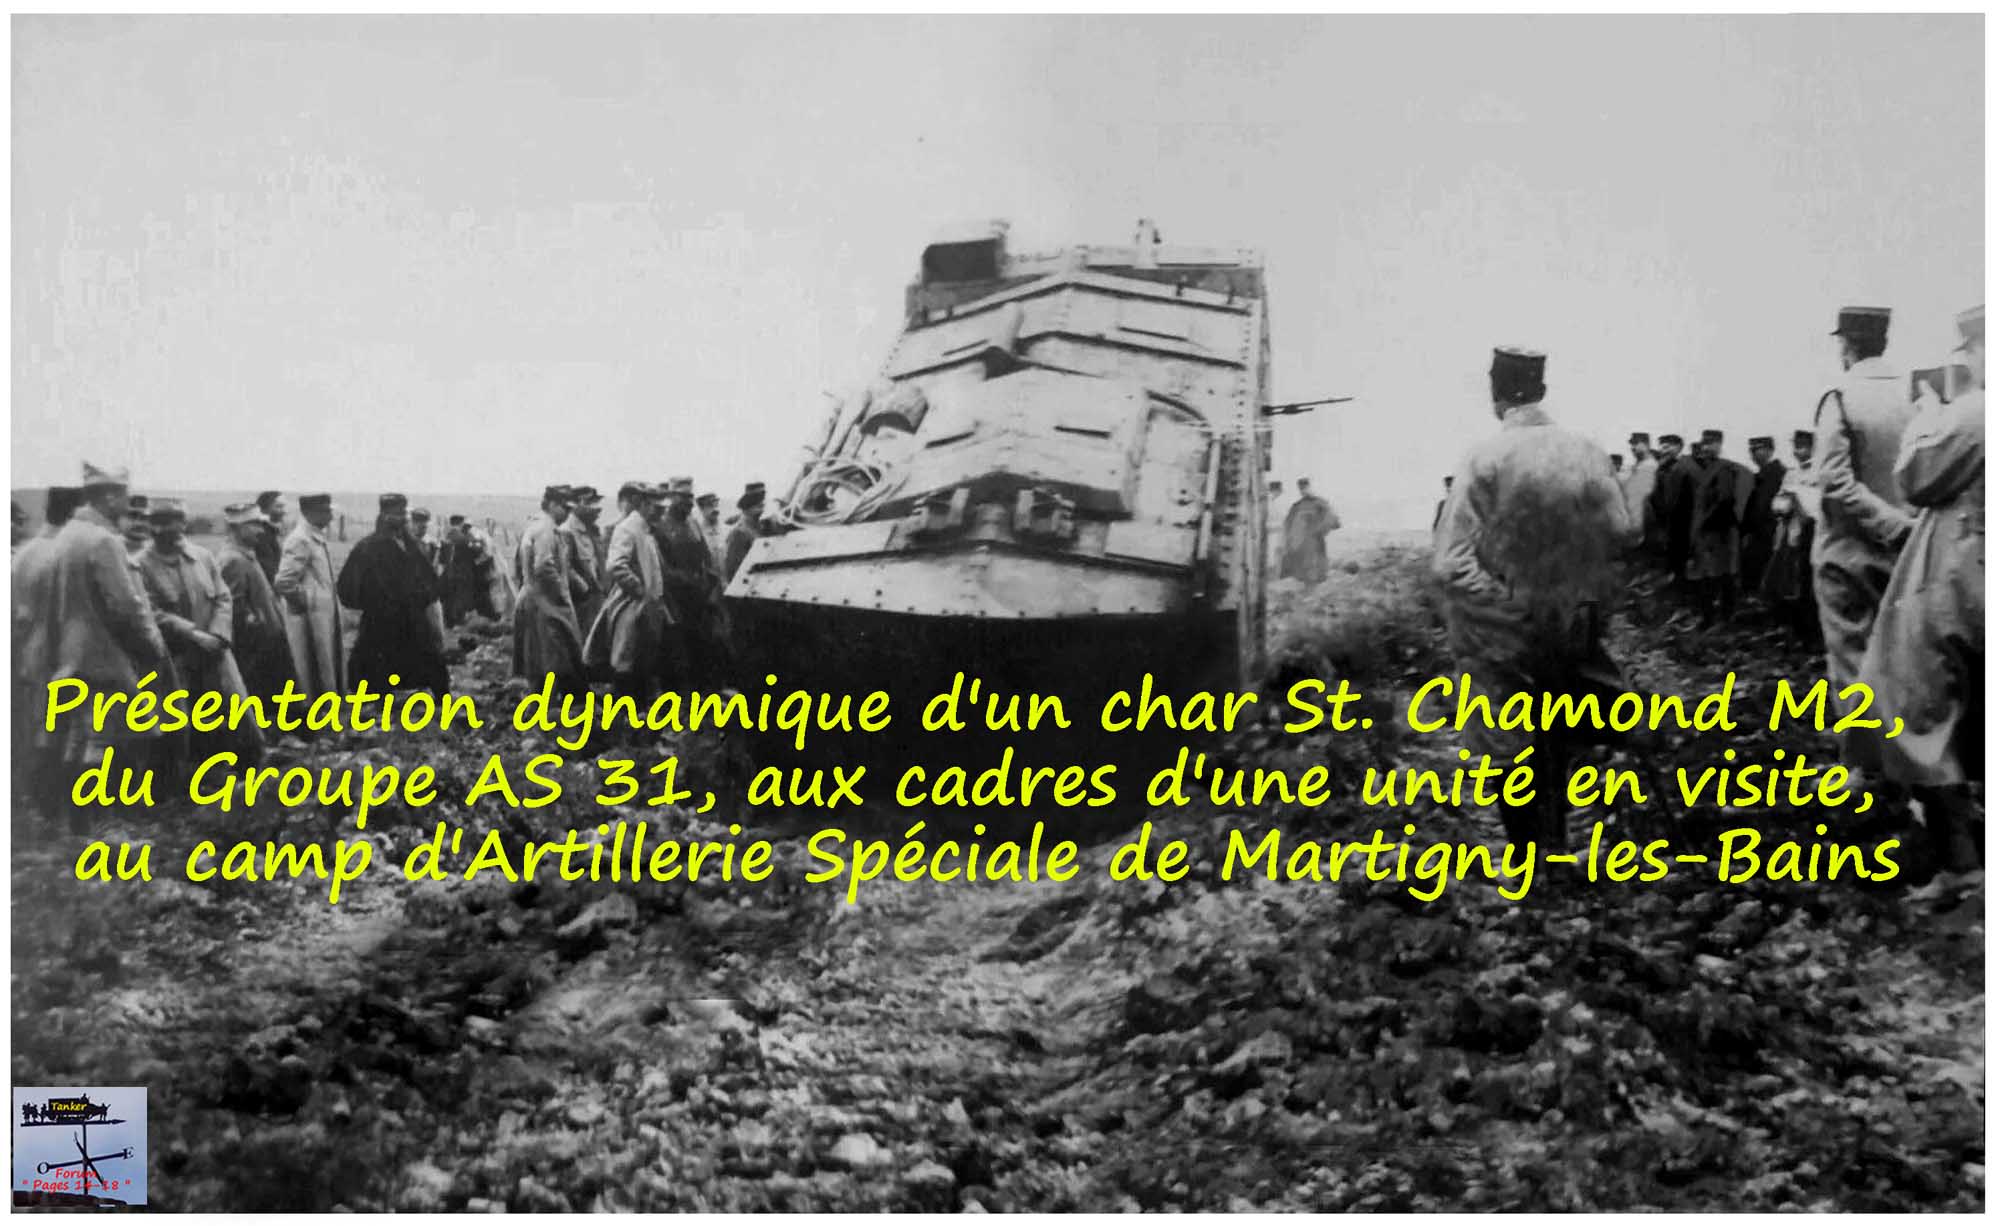 Grpt X - AS 31 - St Chamond M2 - n° 62xxx en instruction cadres (01a1).jpg